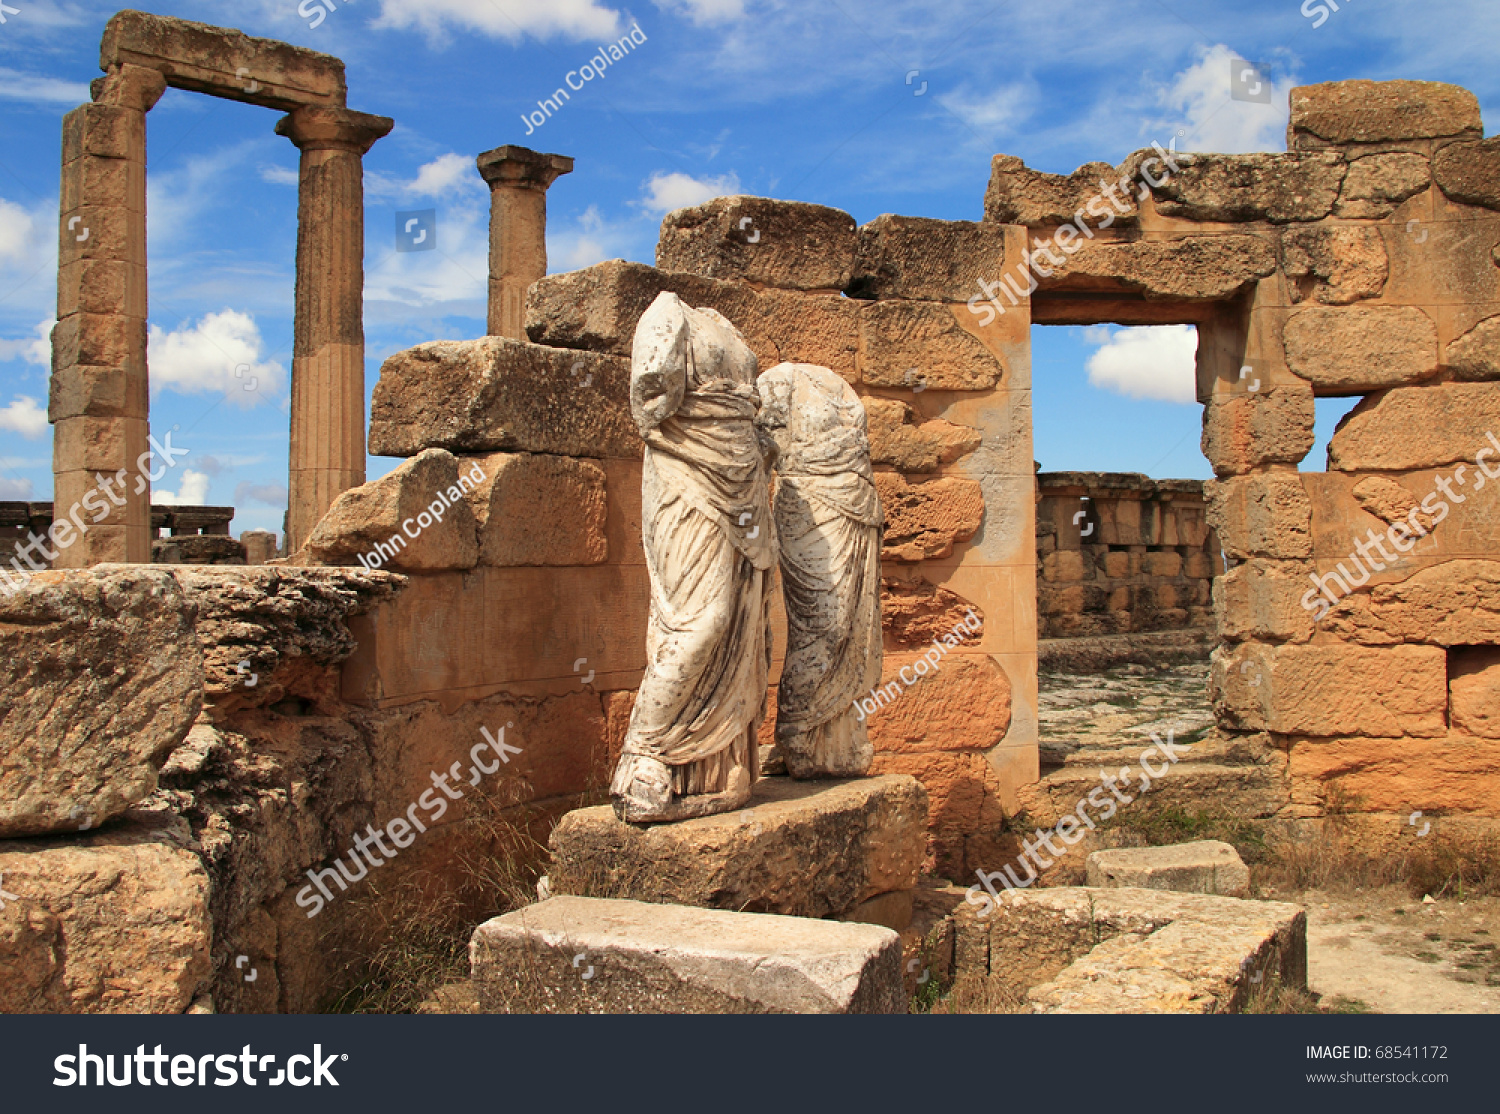 stock-photo-libya-cyrenaica-cyrene-ancient-ruins-headless-stone-statue-of-woman-unesco-world-heritage-site-68541172.jpg